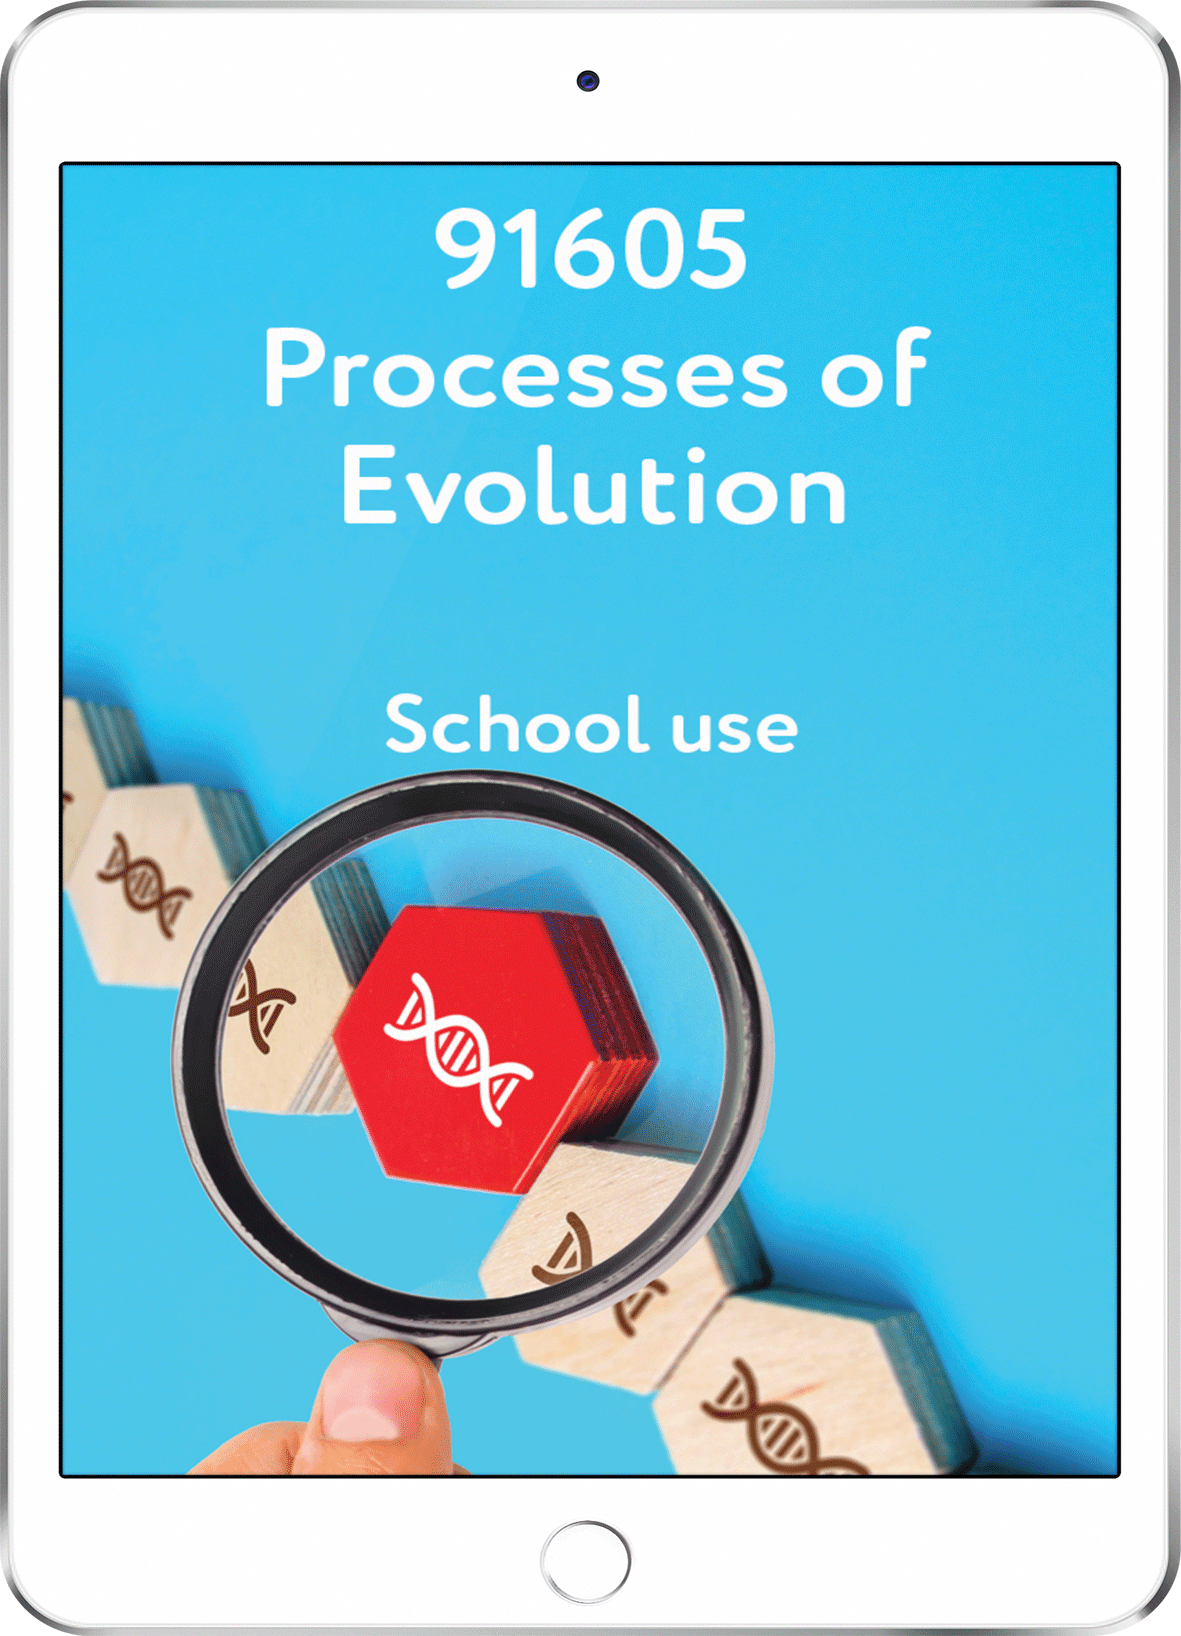 91605 Processes of Evolution - School Use